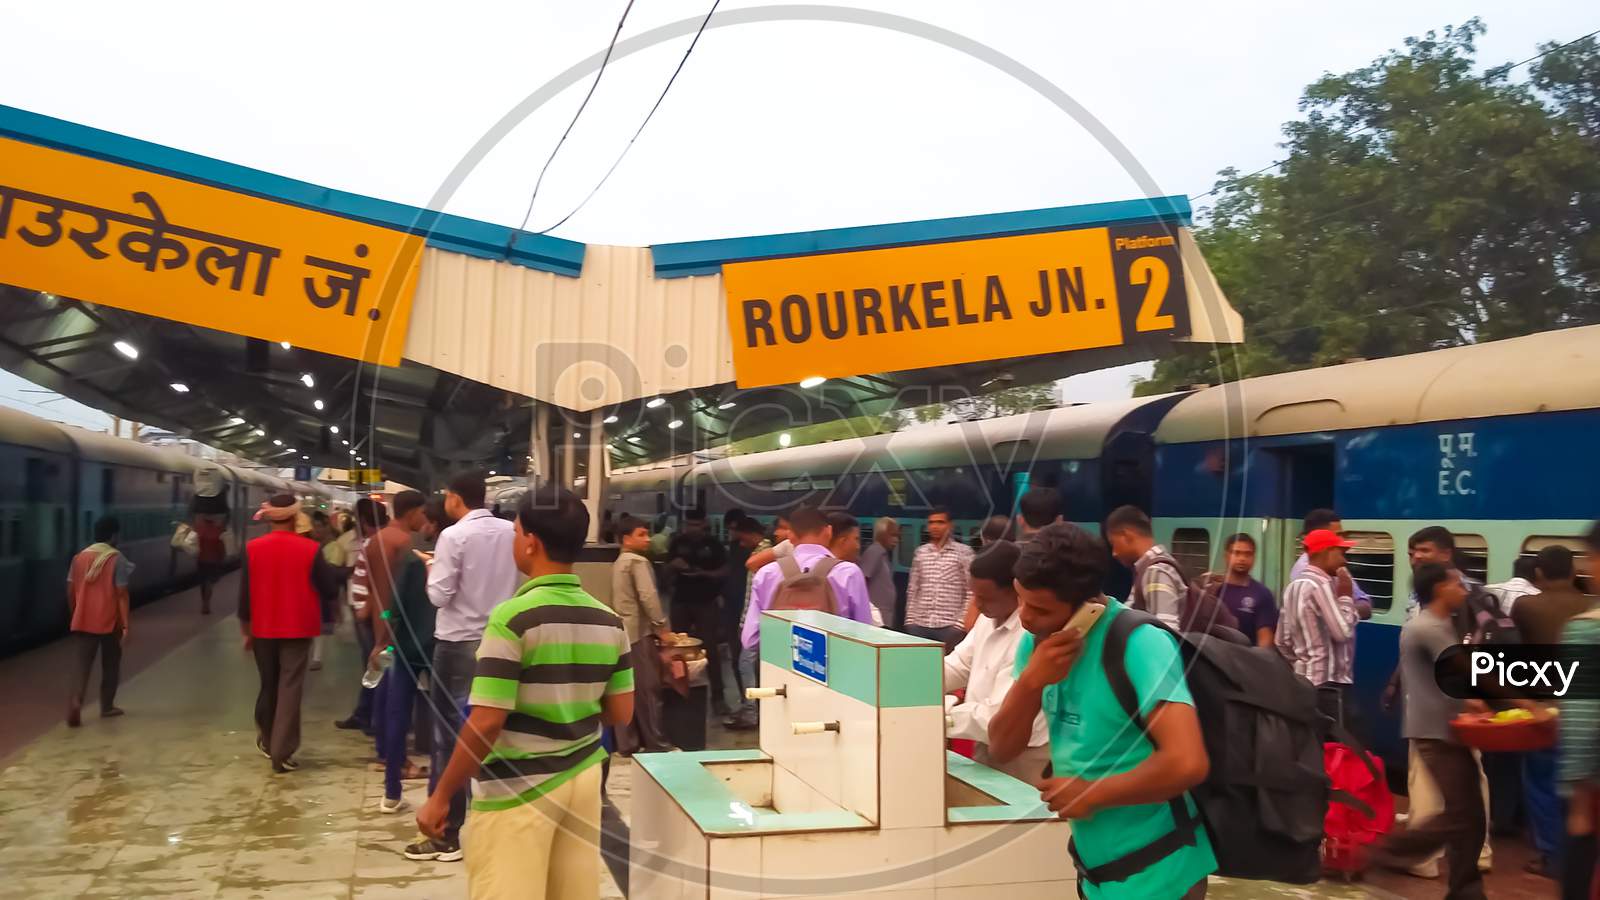 Rourkela Railway Station and passengers Images covid-19 lockdown